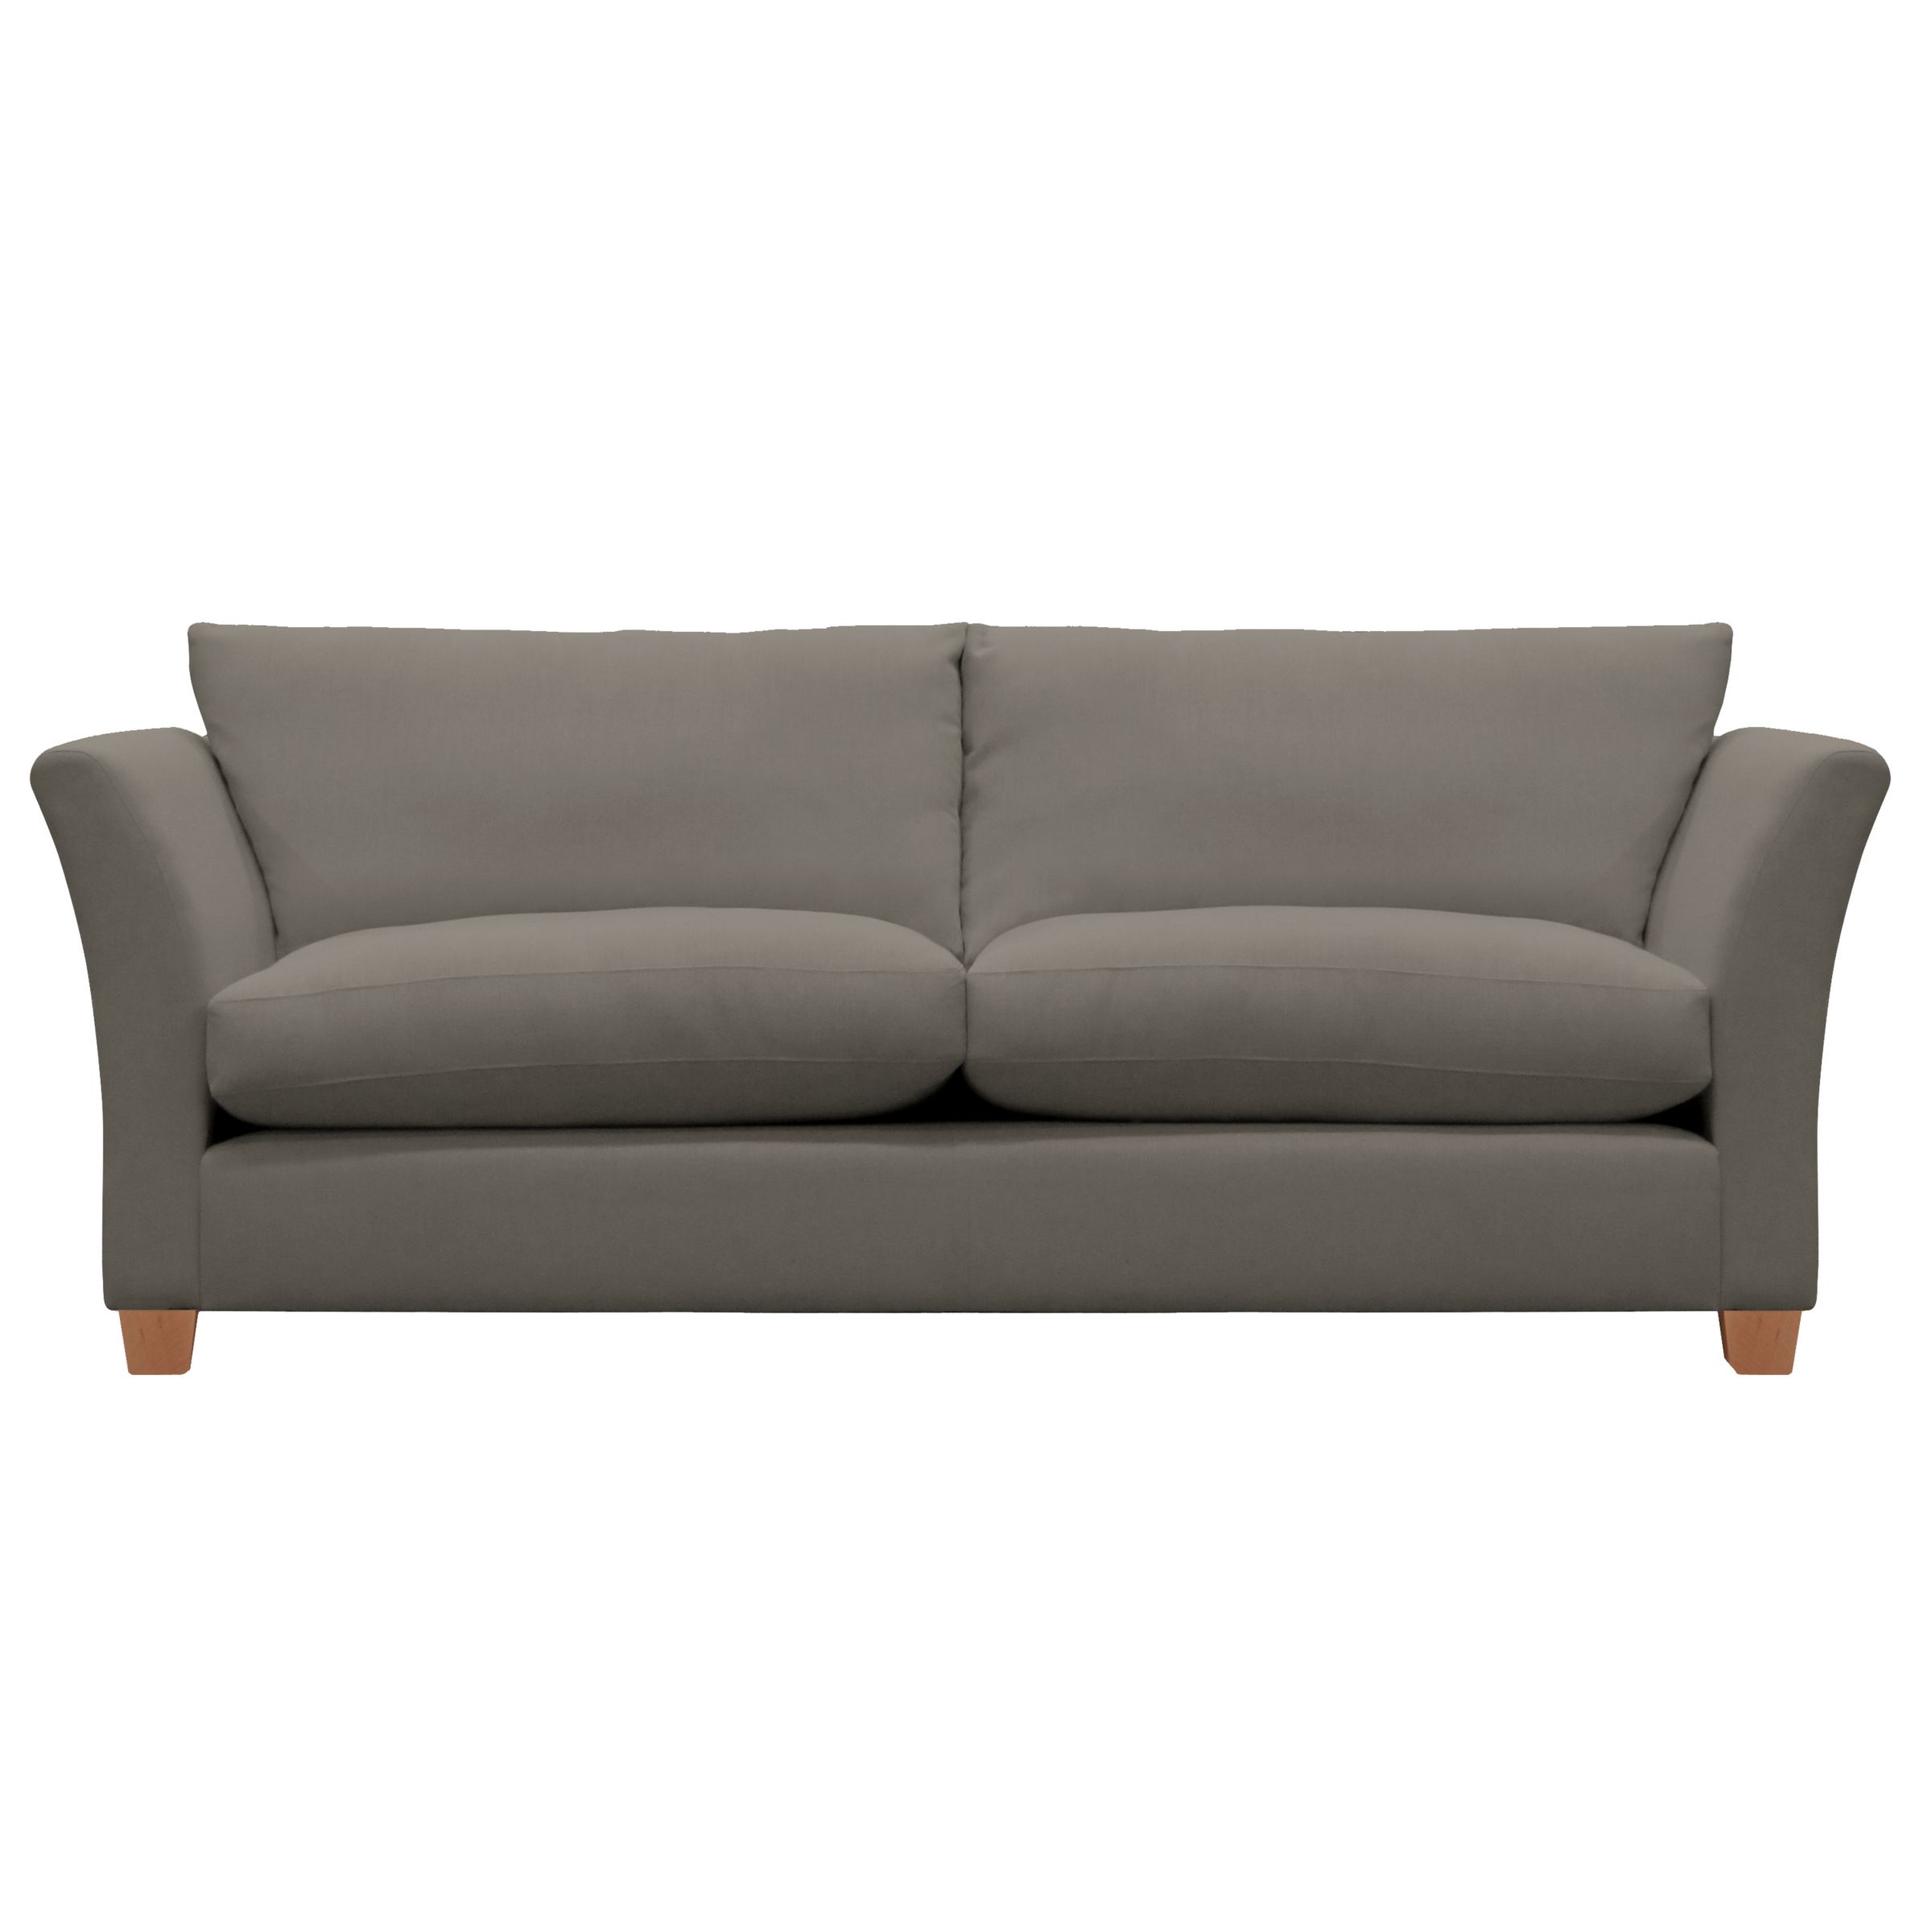 John Lewis Options Flare Arm Grand Sofa, Linley Slate, width 225cm